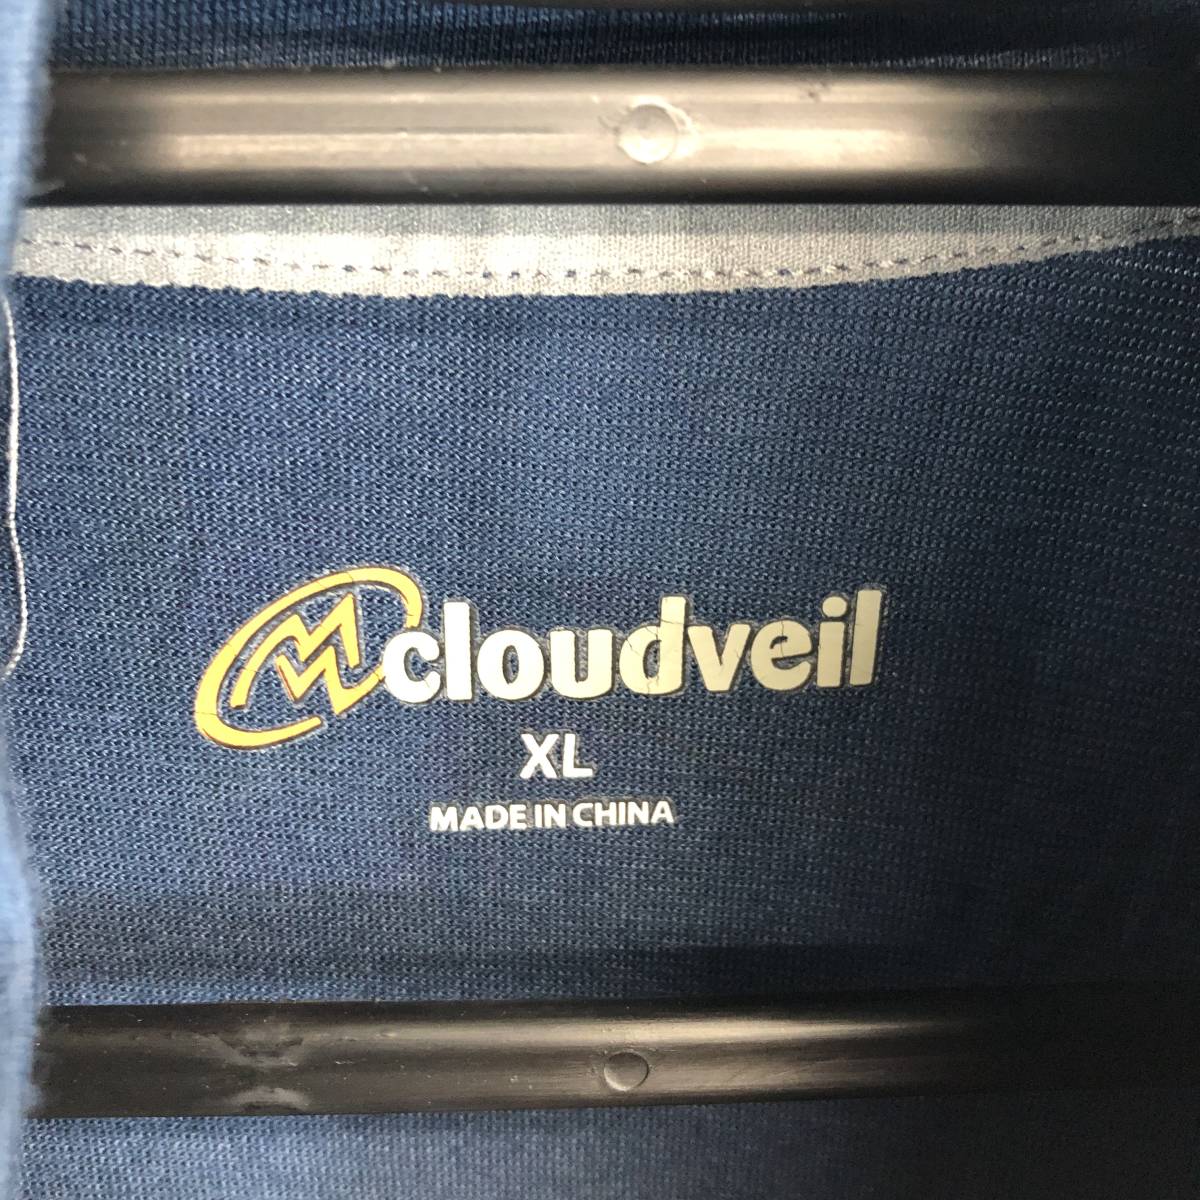  Cloudveil Cloudveil длинный рукав половина Zip рубашка XL размер 982296 USA б/у одежда 